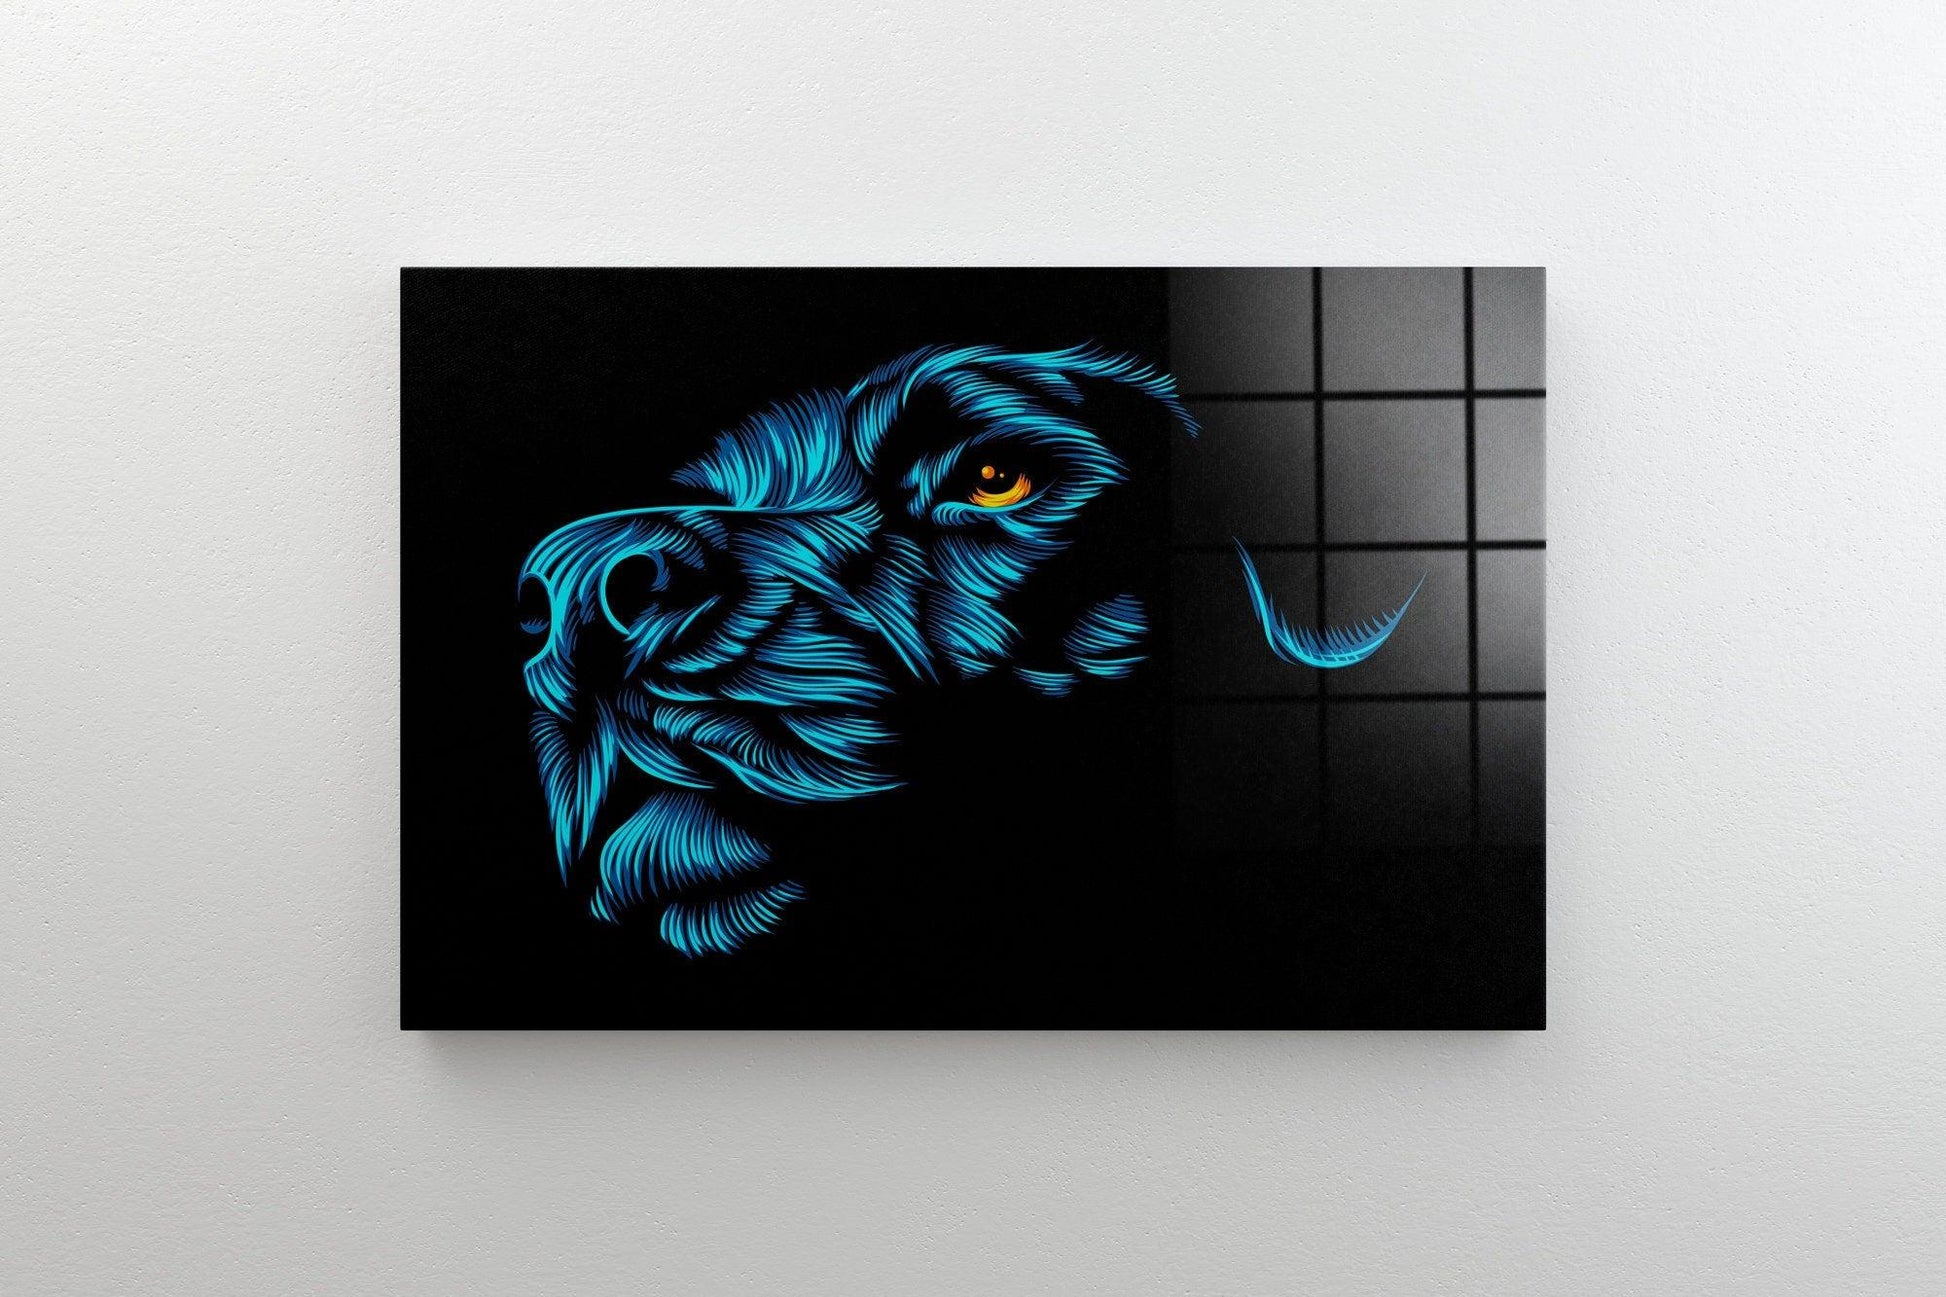 abstract lion glass wall art| Lion Wall Art, Lion Poster, Animal Wall Art, Animal Poster, Animal Canvas, Animal wall decor, animal glass art